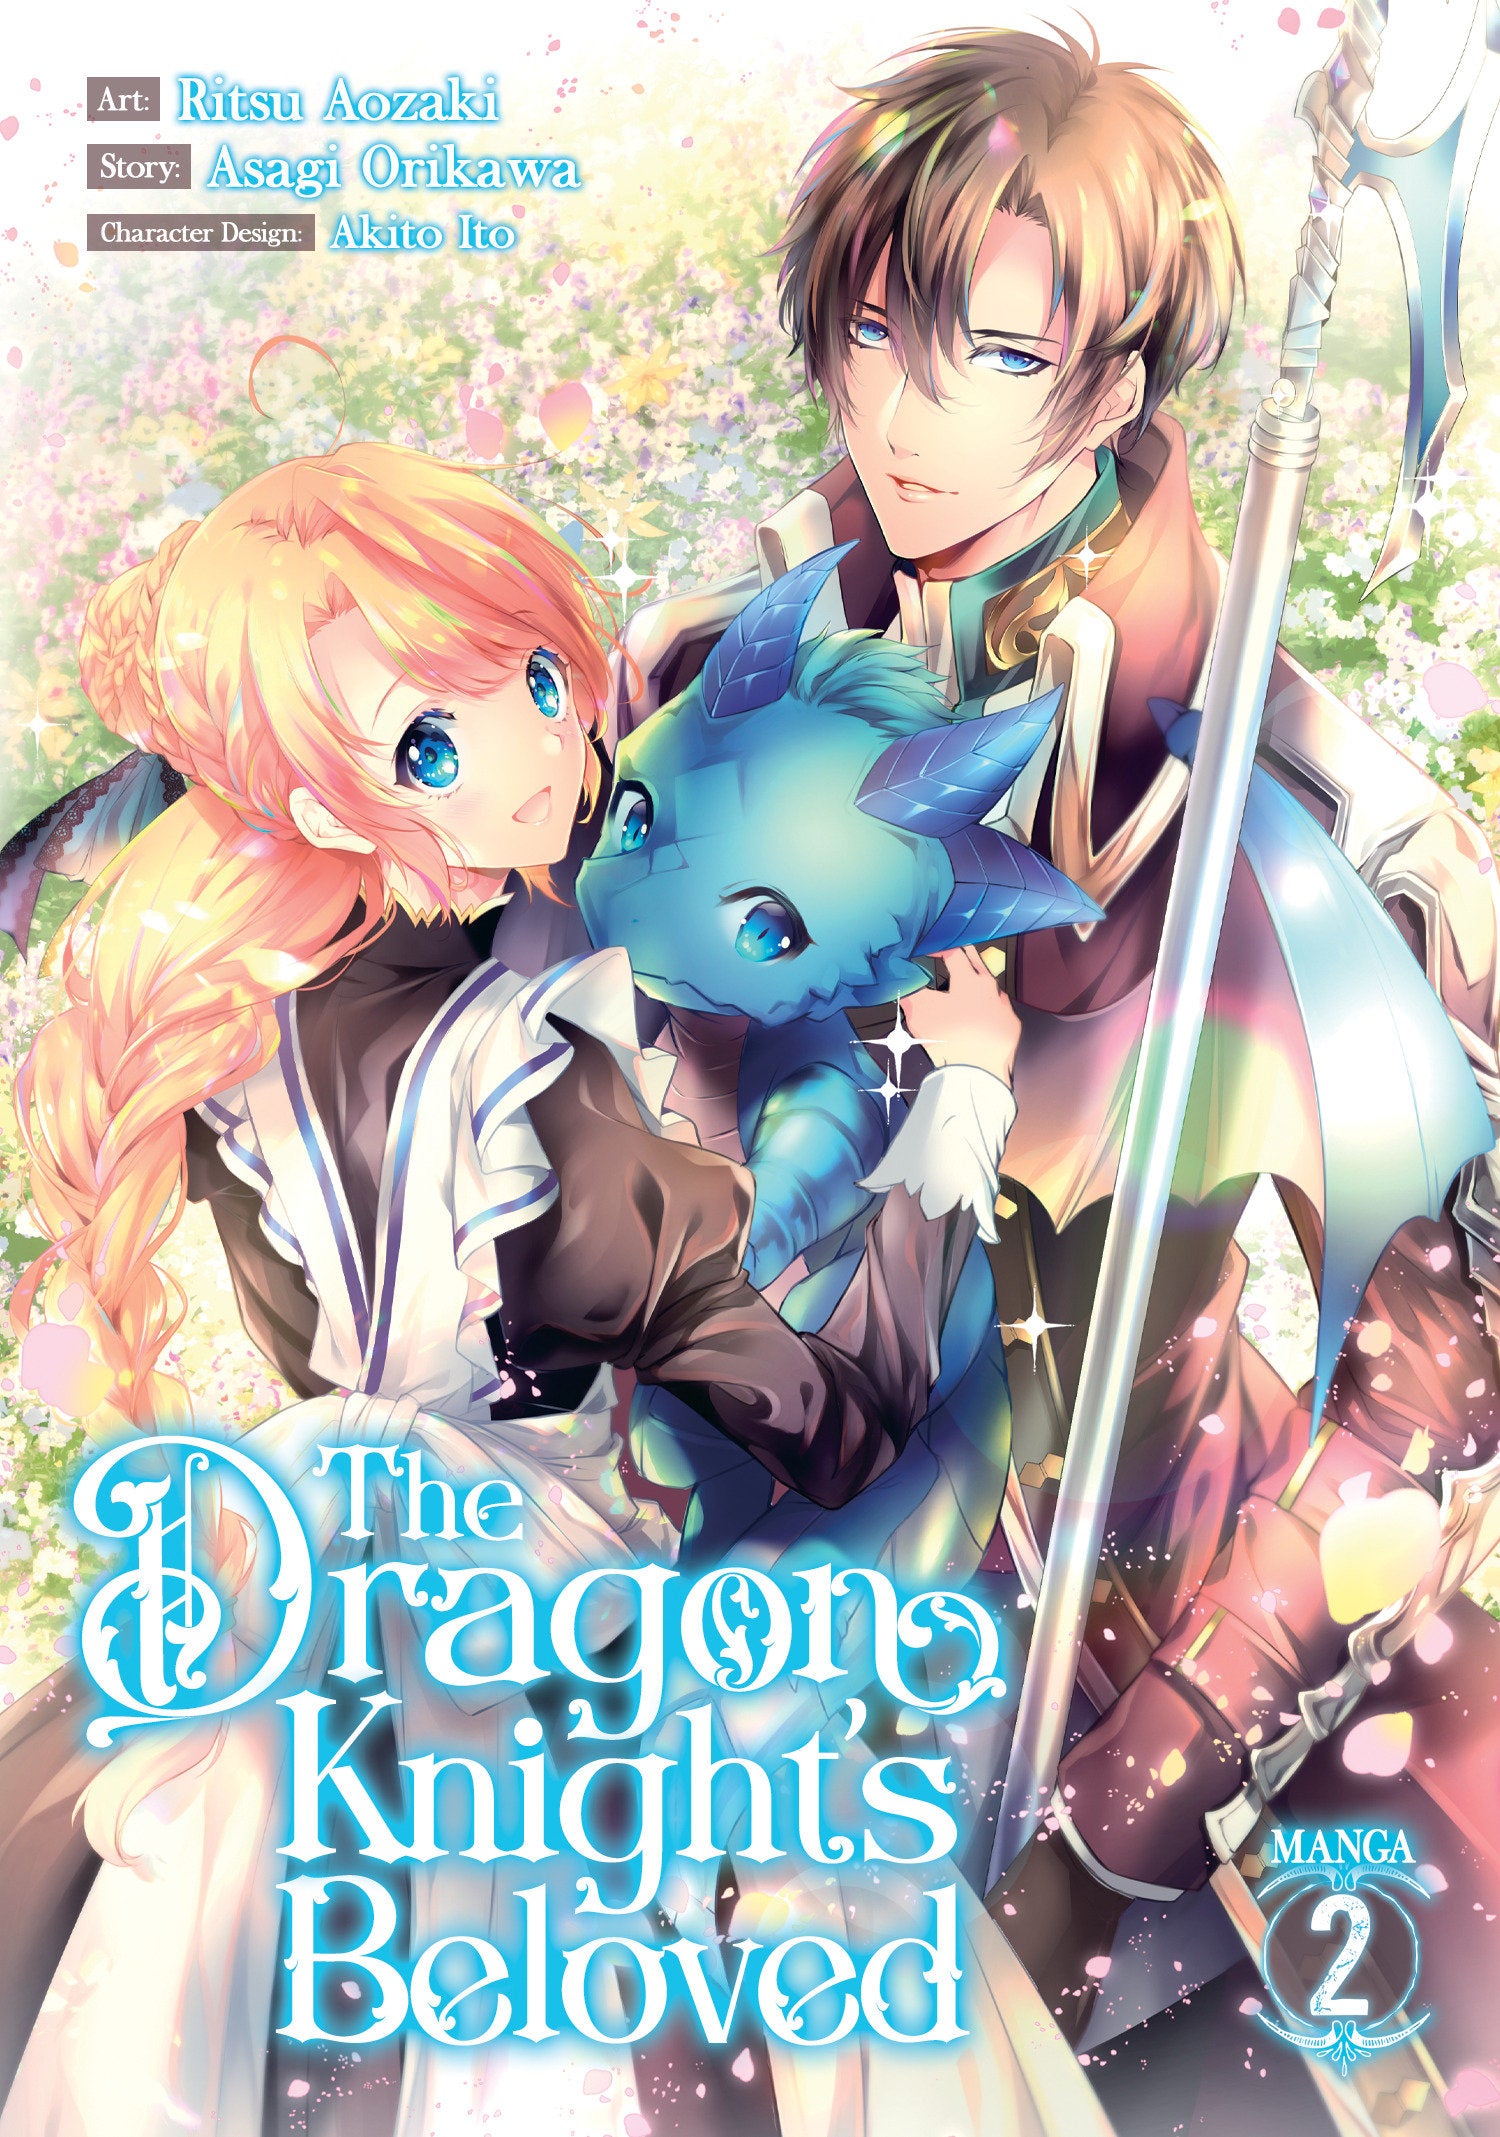 The Dragon Knight's Beloved (Manga) Vol. 02